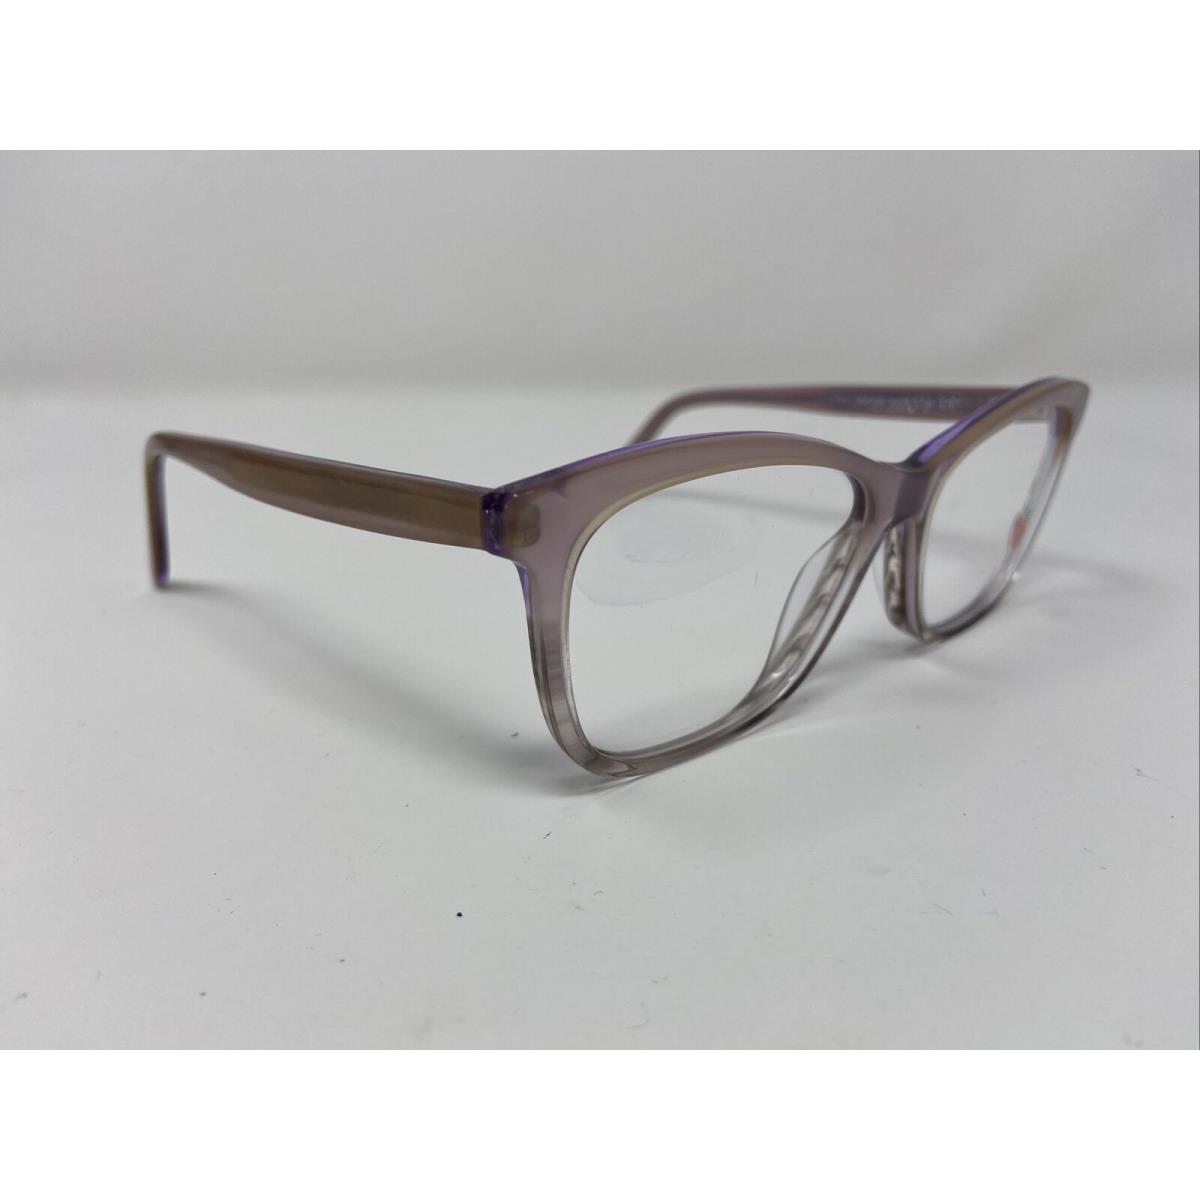 Maui Jim eyeglasses  - Beige Frame 2